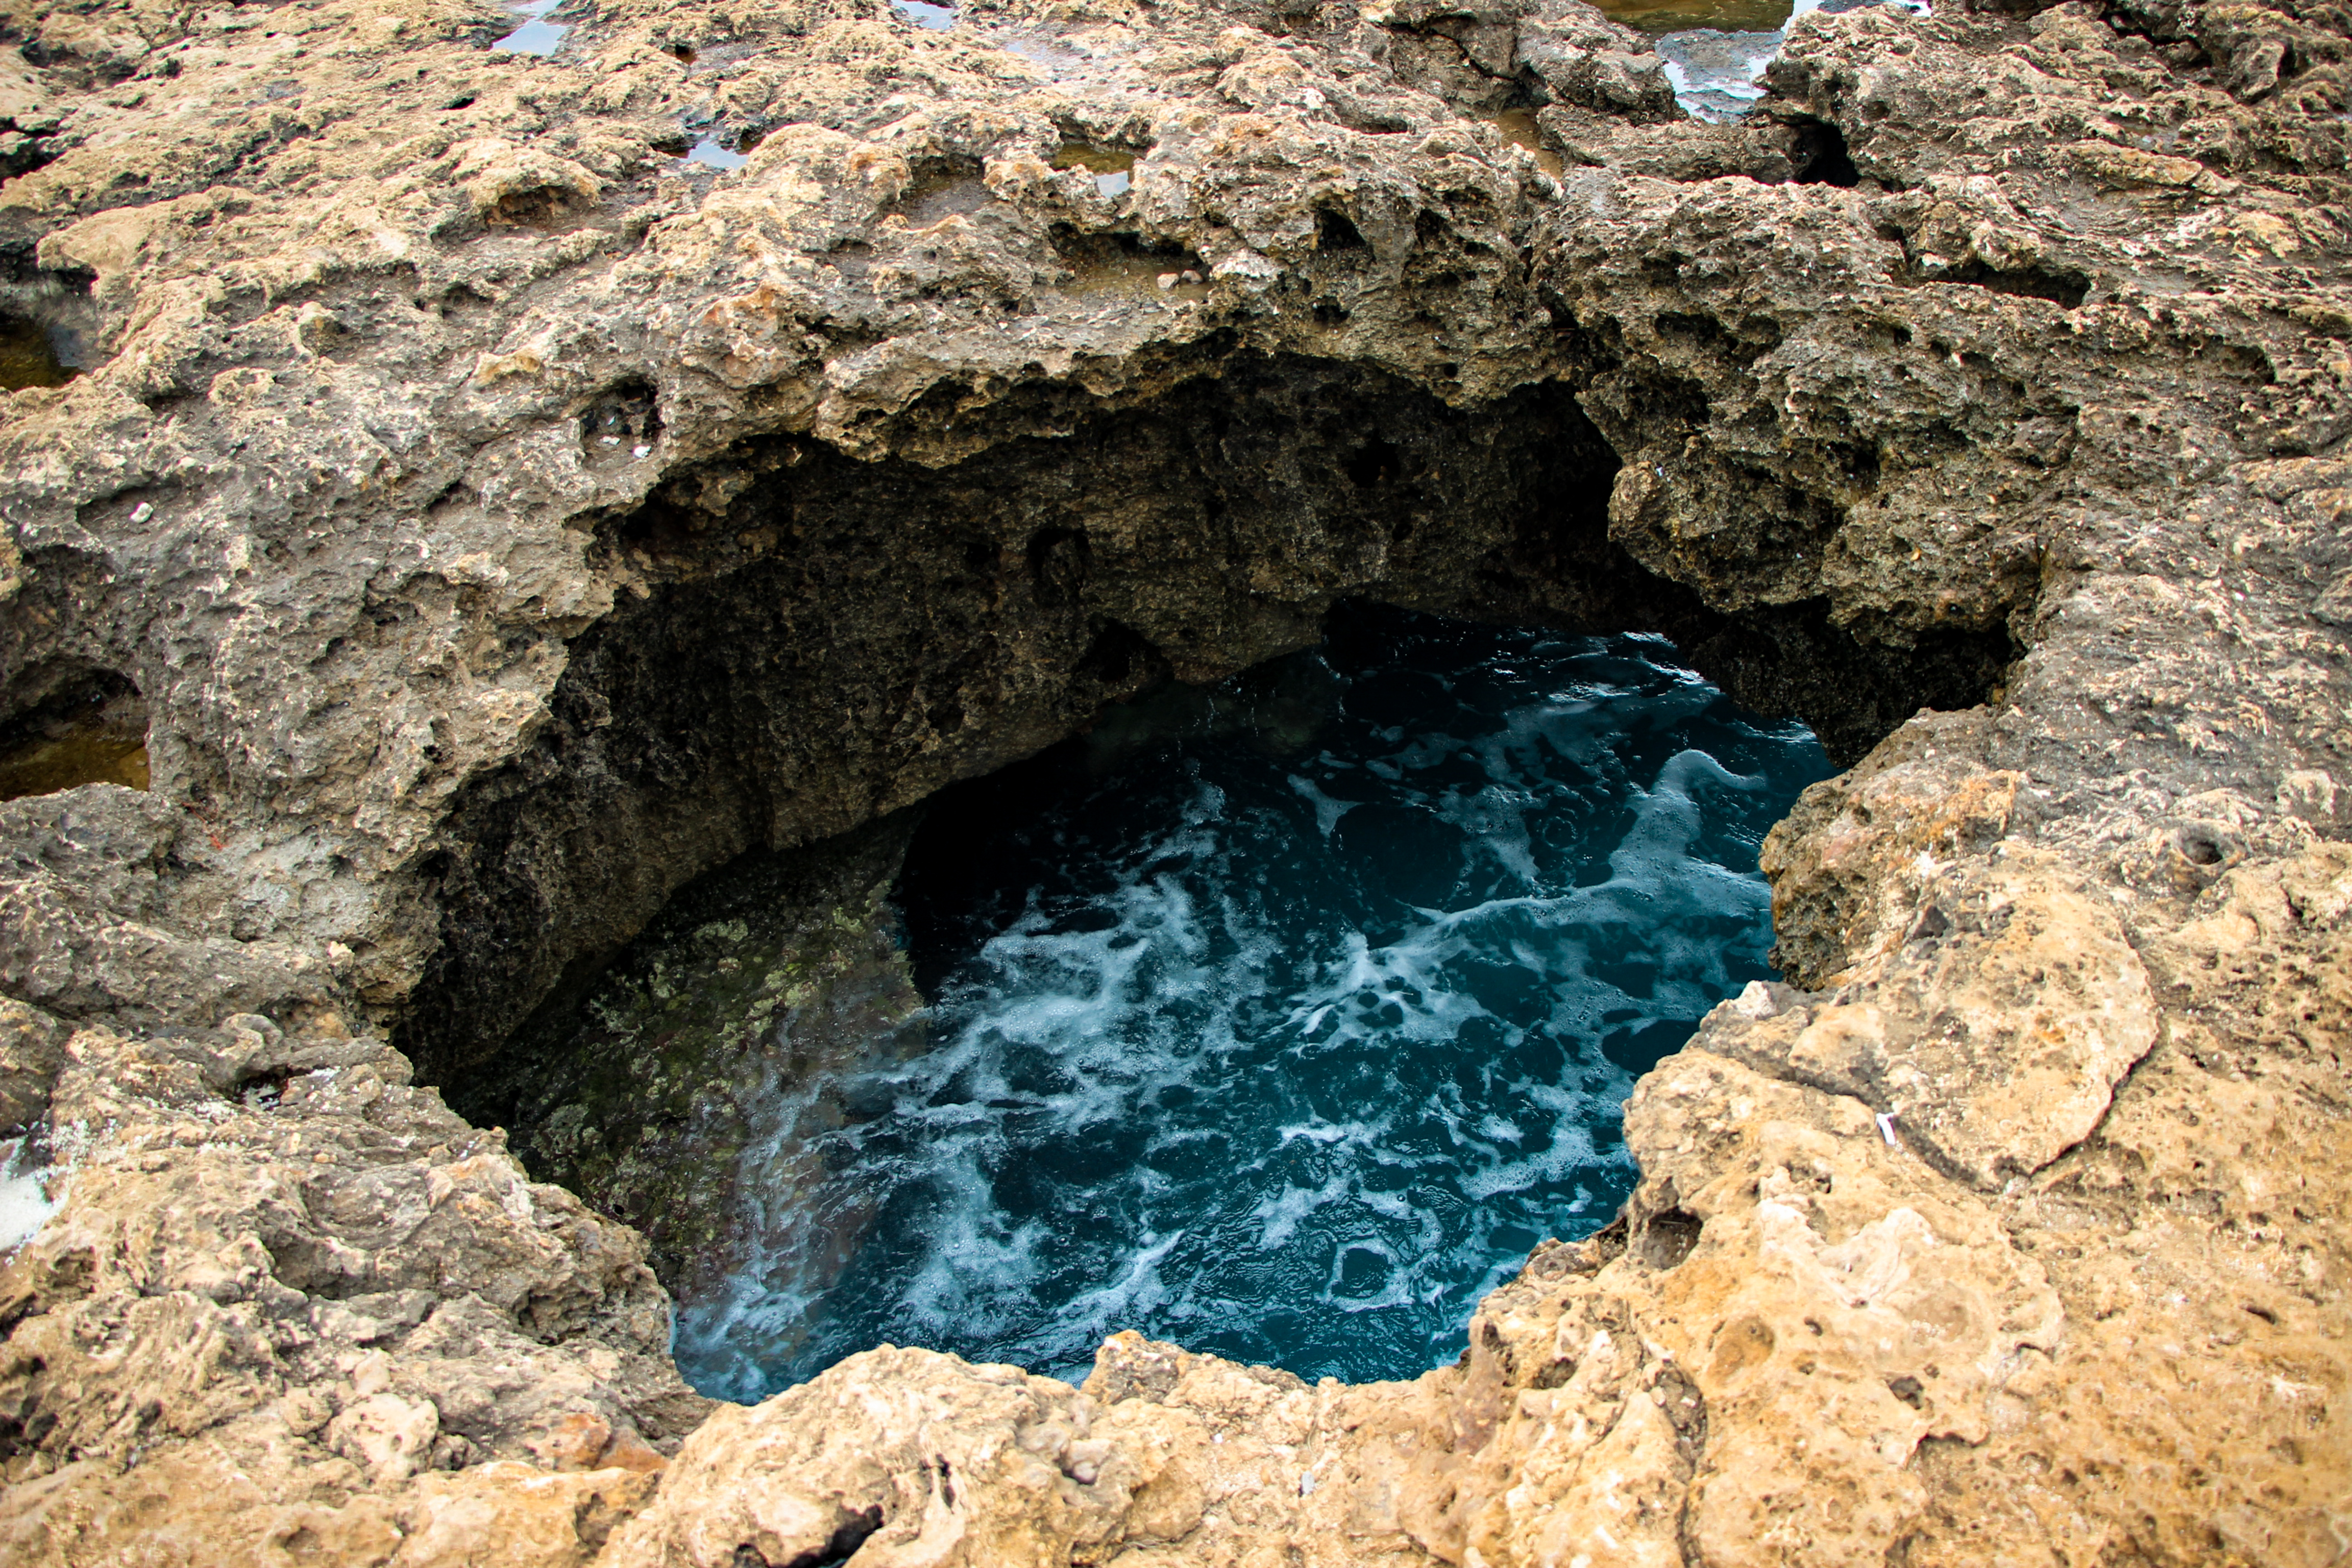 Mermaid Cave